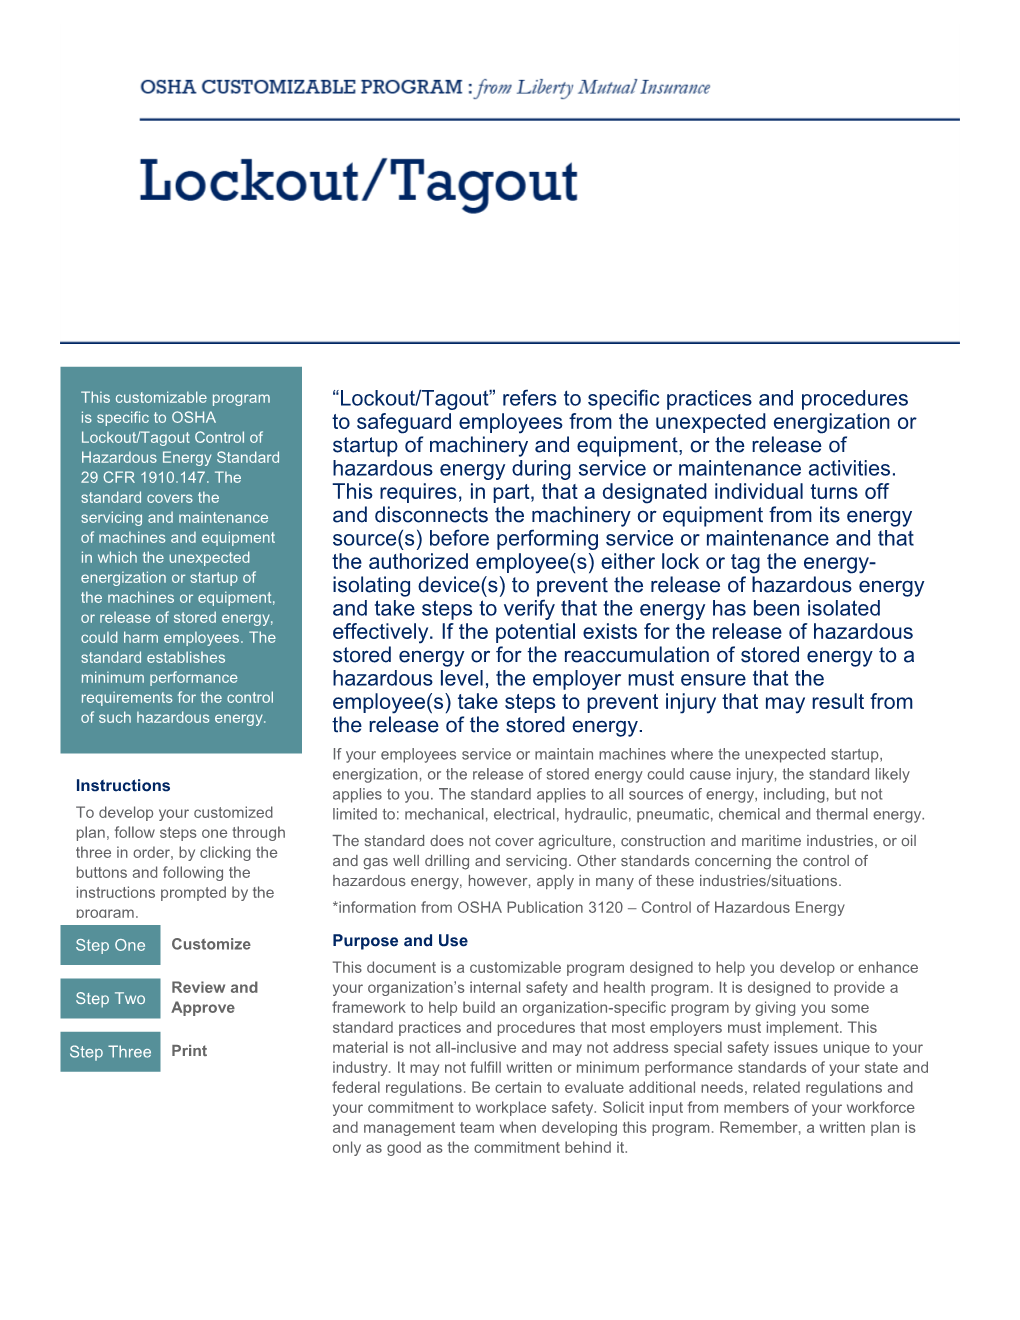 OSHA Customizable Program: Lockout/Tagout, LC 4505